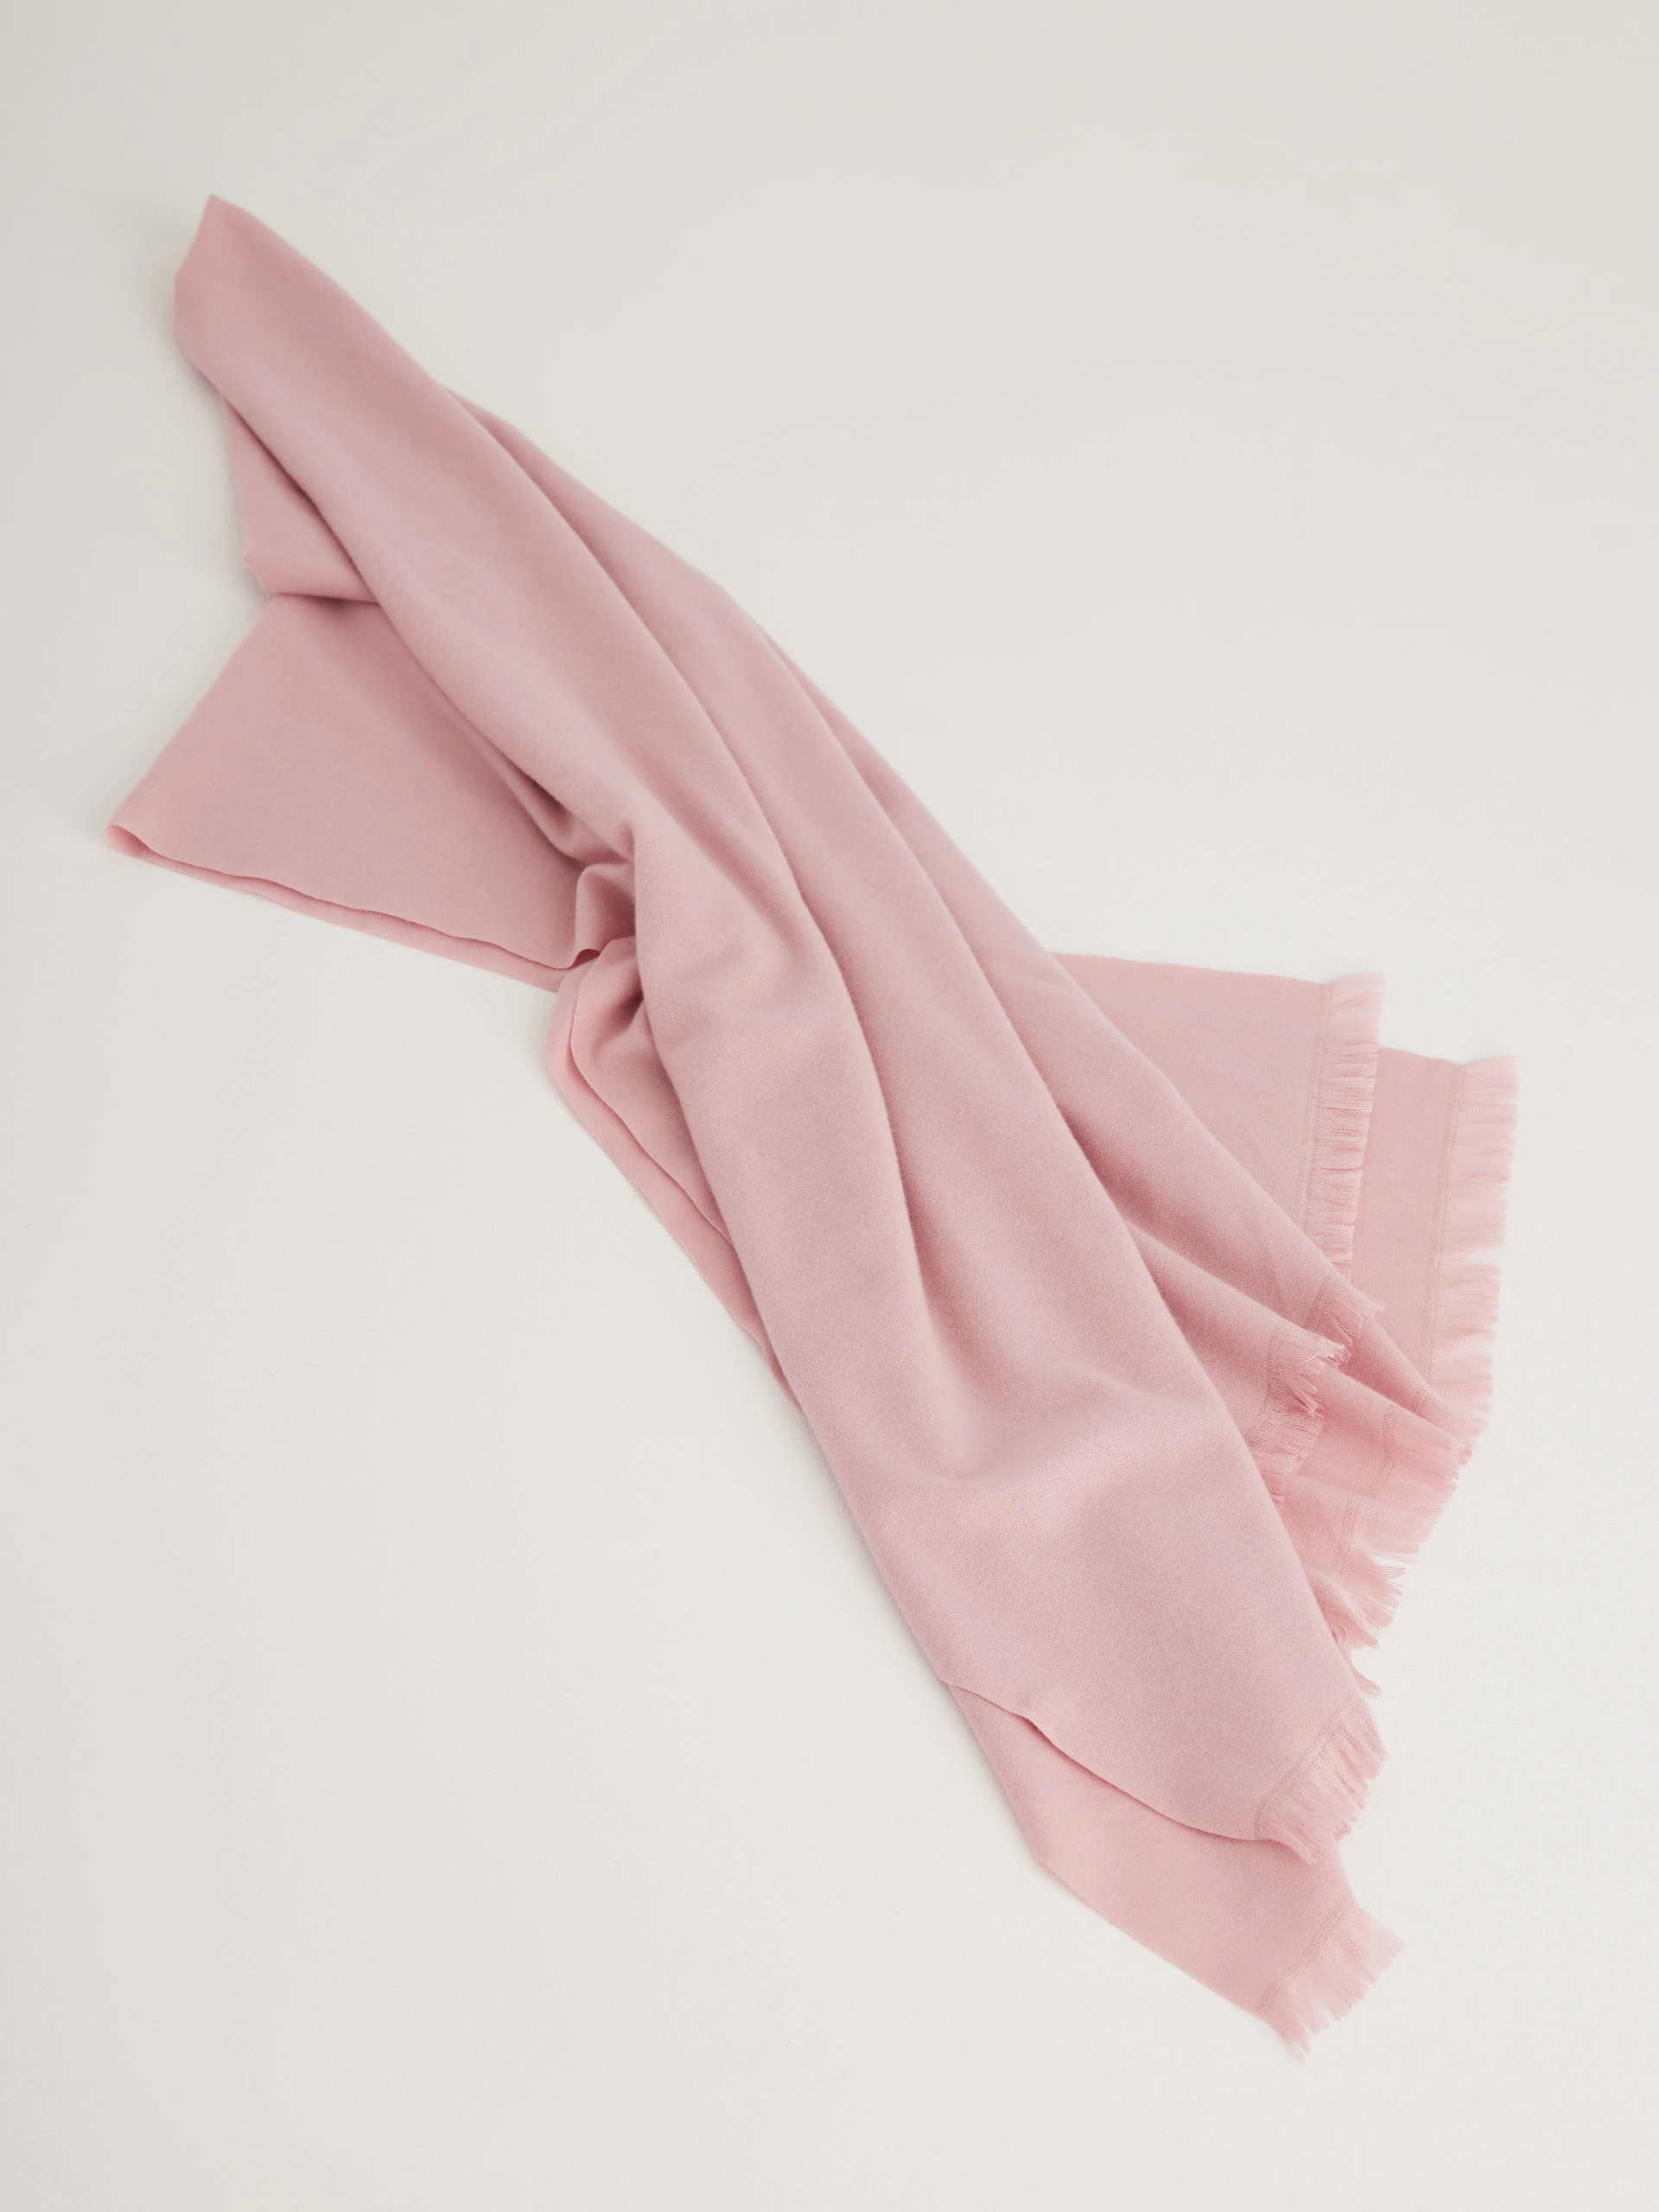 Dark pink shawl